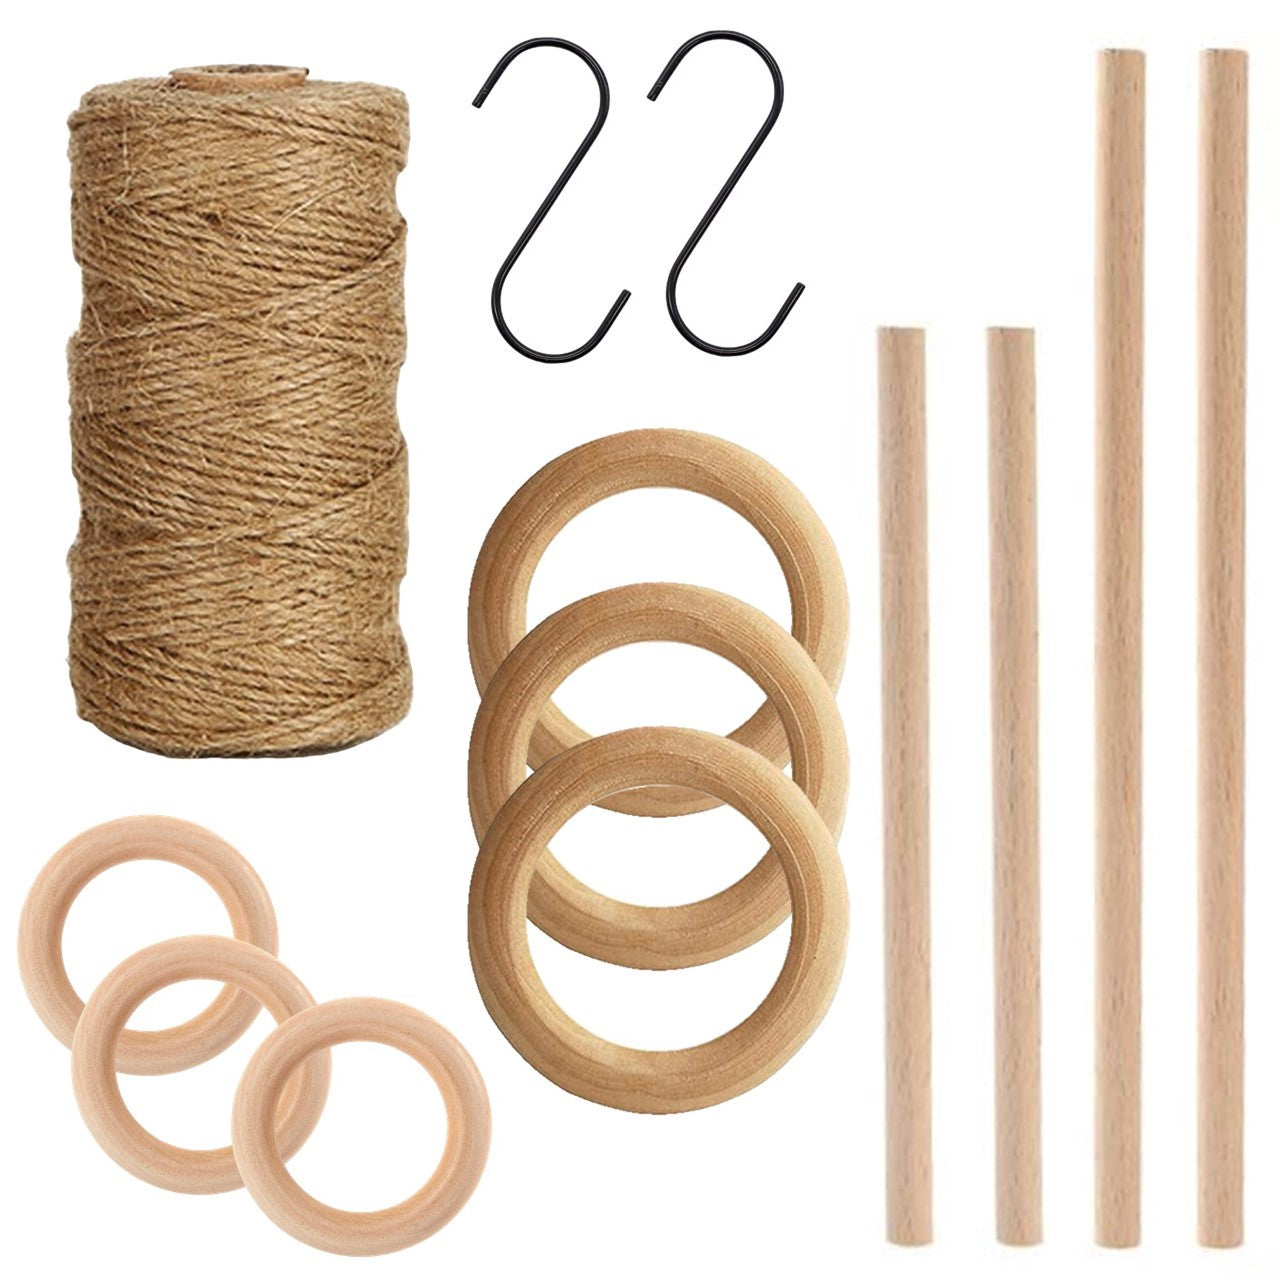 ecofynd DIY Jute Cord Kit for Plant Hanger, Wall Hanging Art & Craft Kit freeshipping - Ecofynd